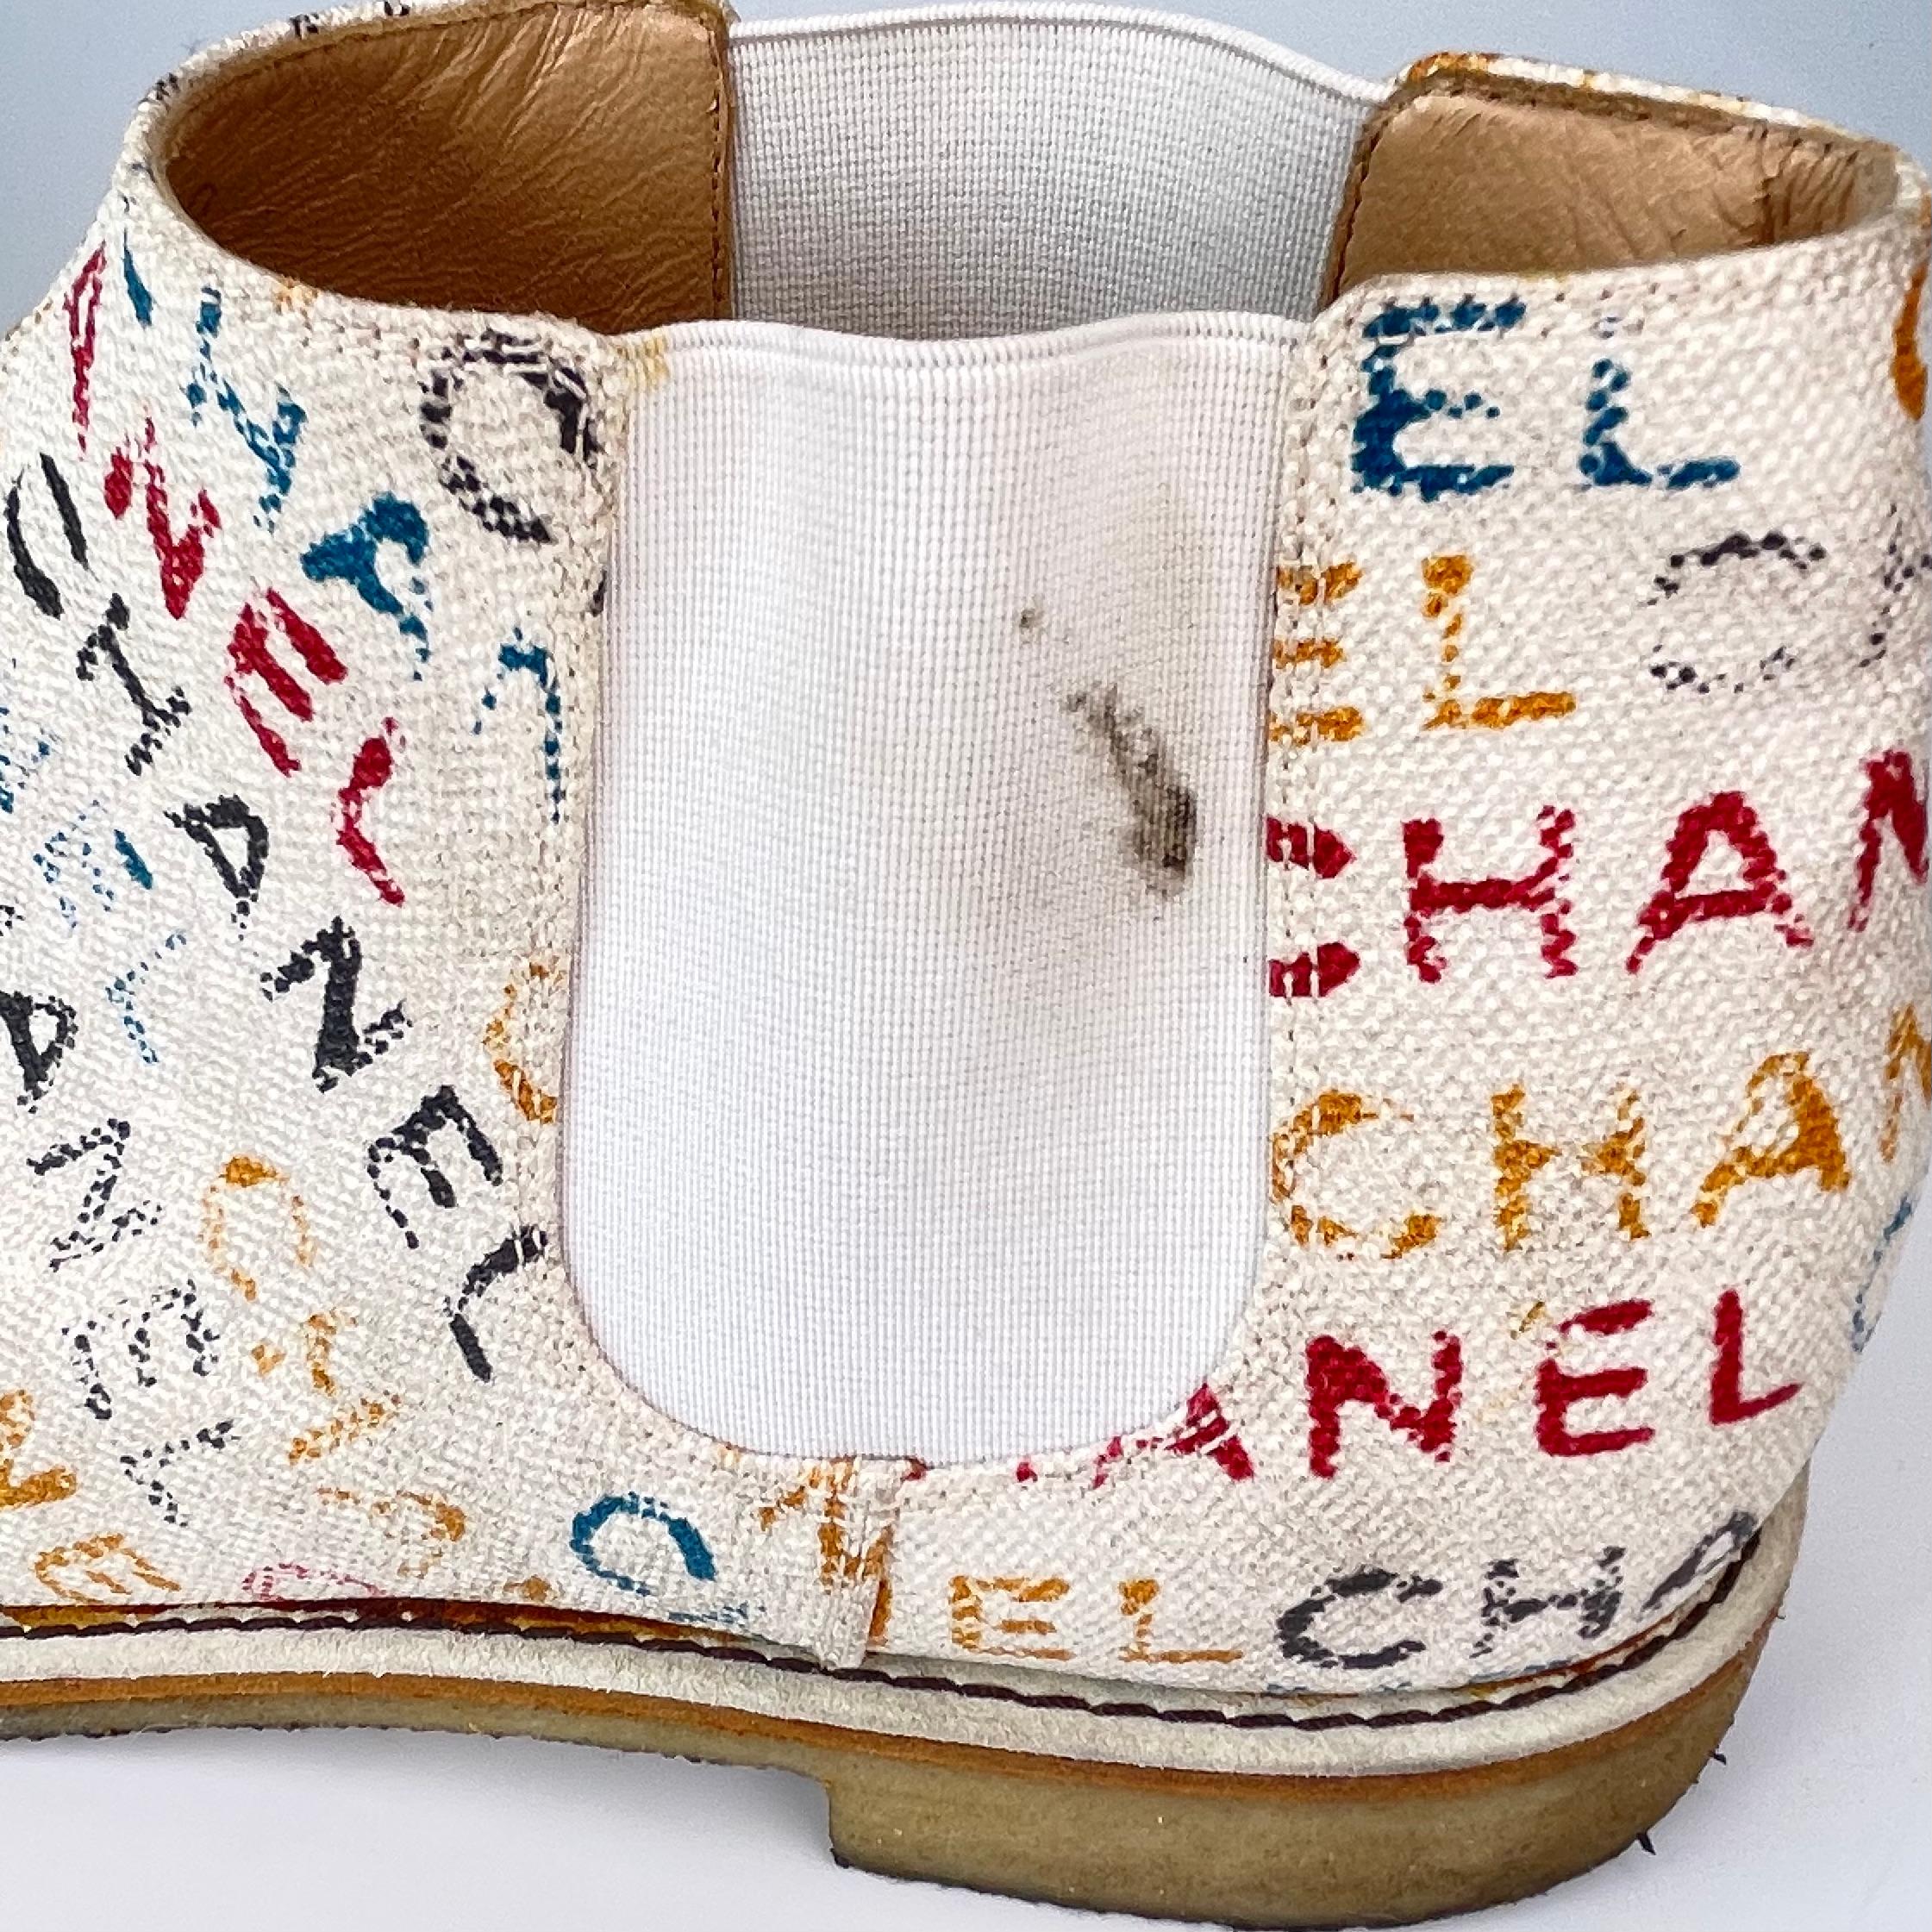 Beige Chanel Graffiti Chukka Cream Boot Mens (43 EU) For Sale